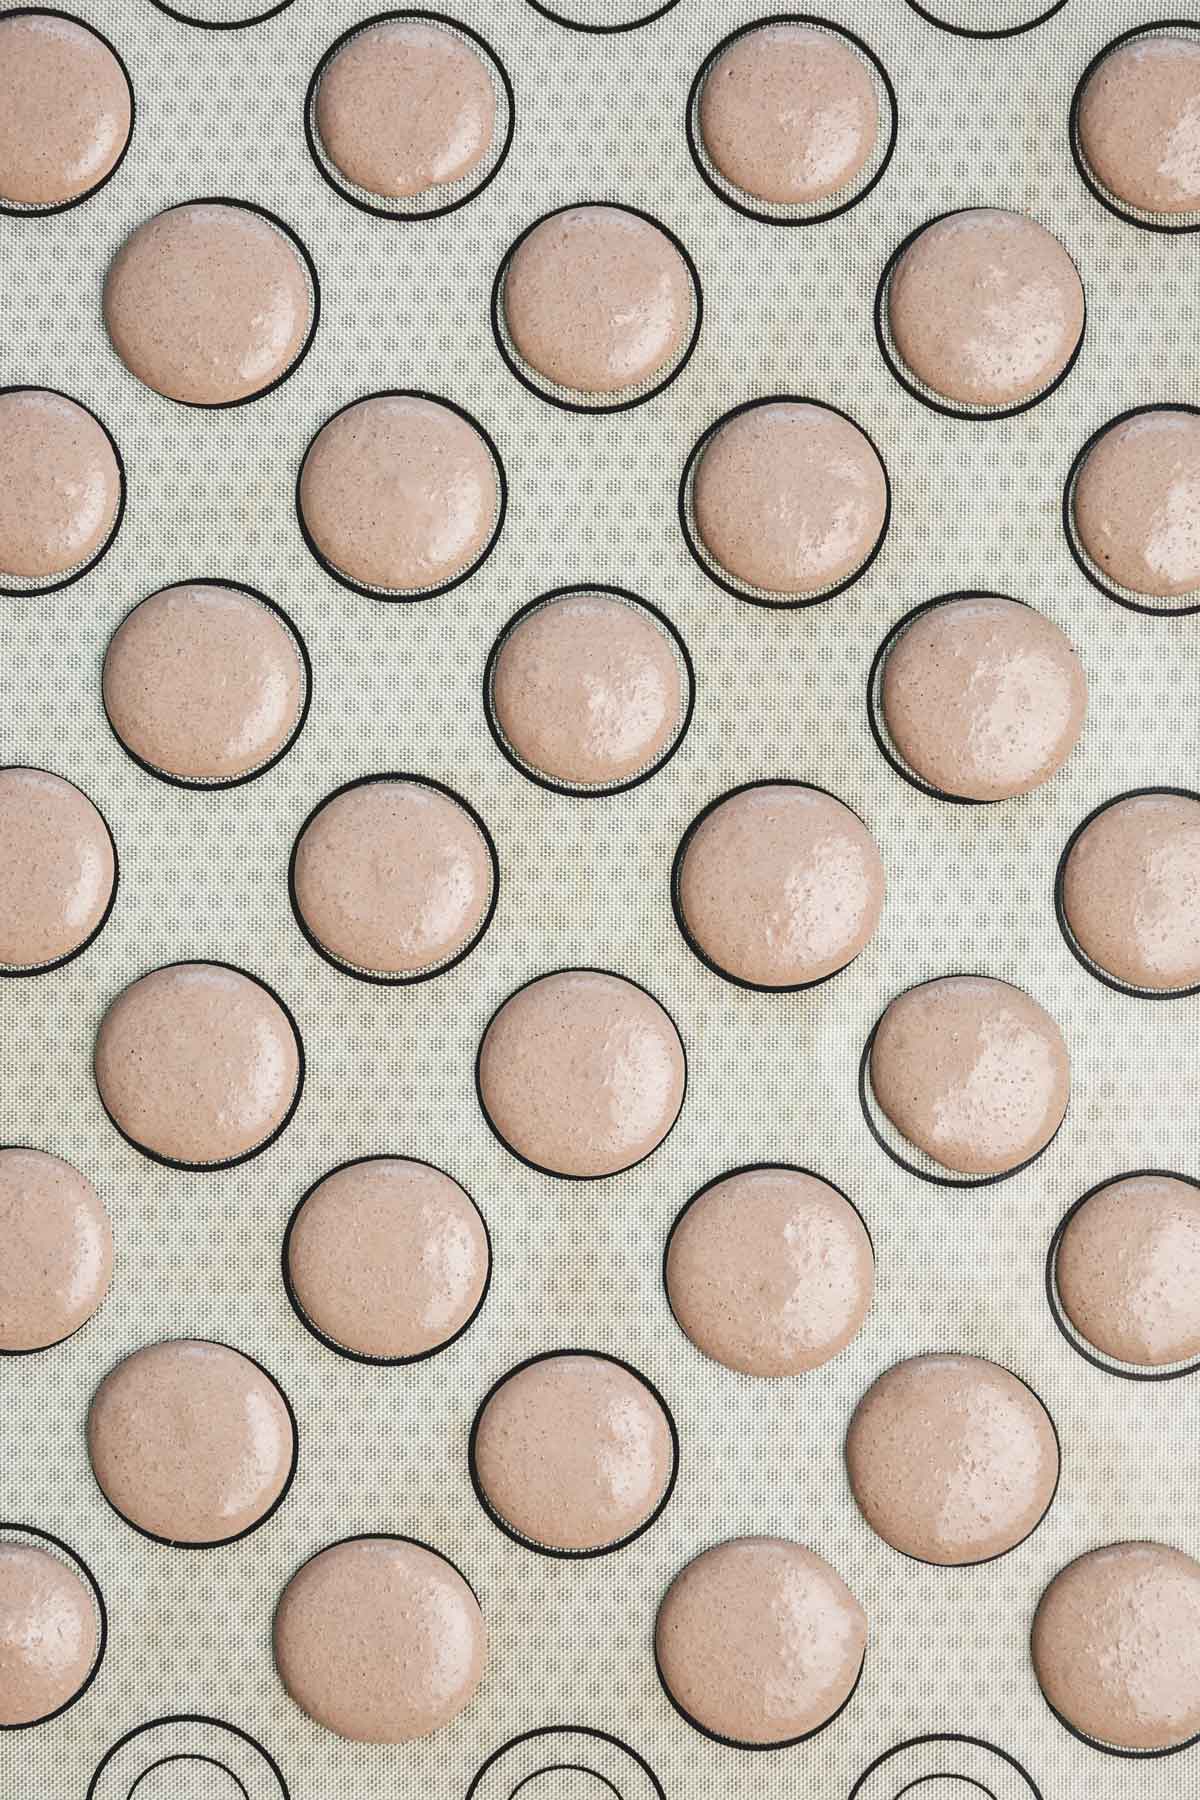 chocolate macaron shells